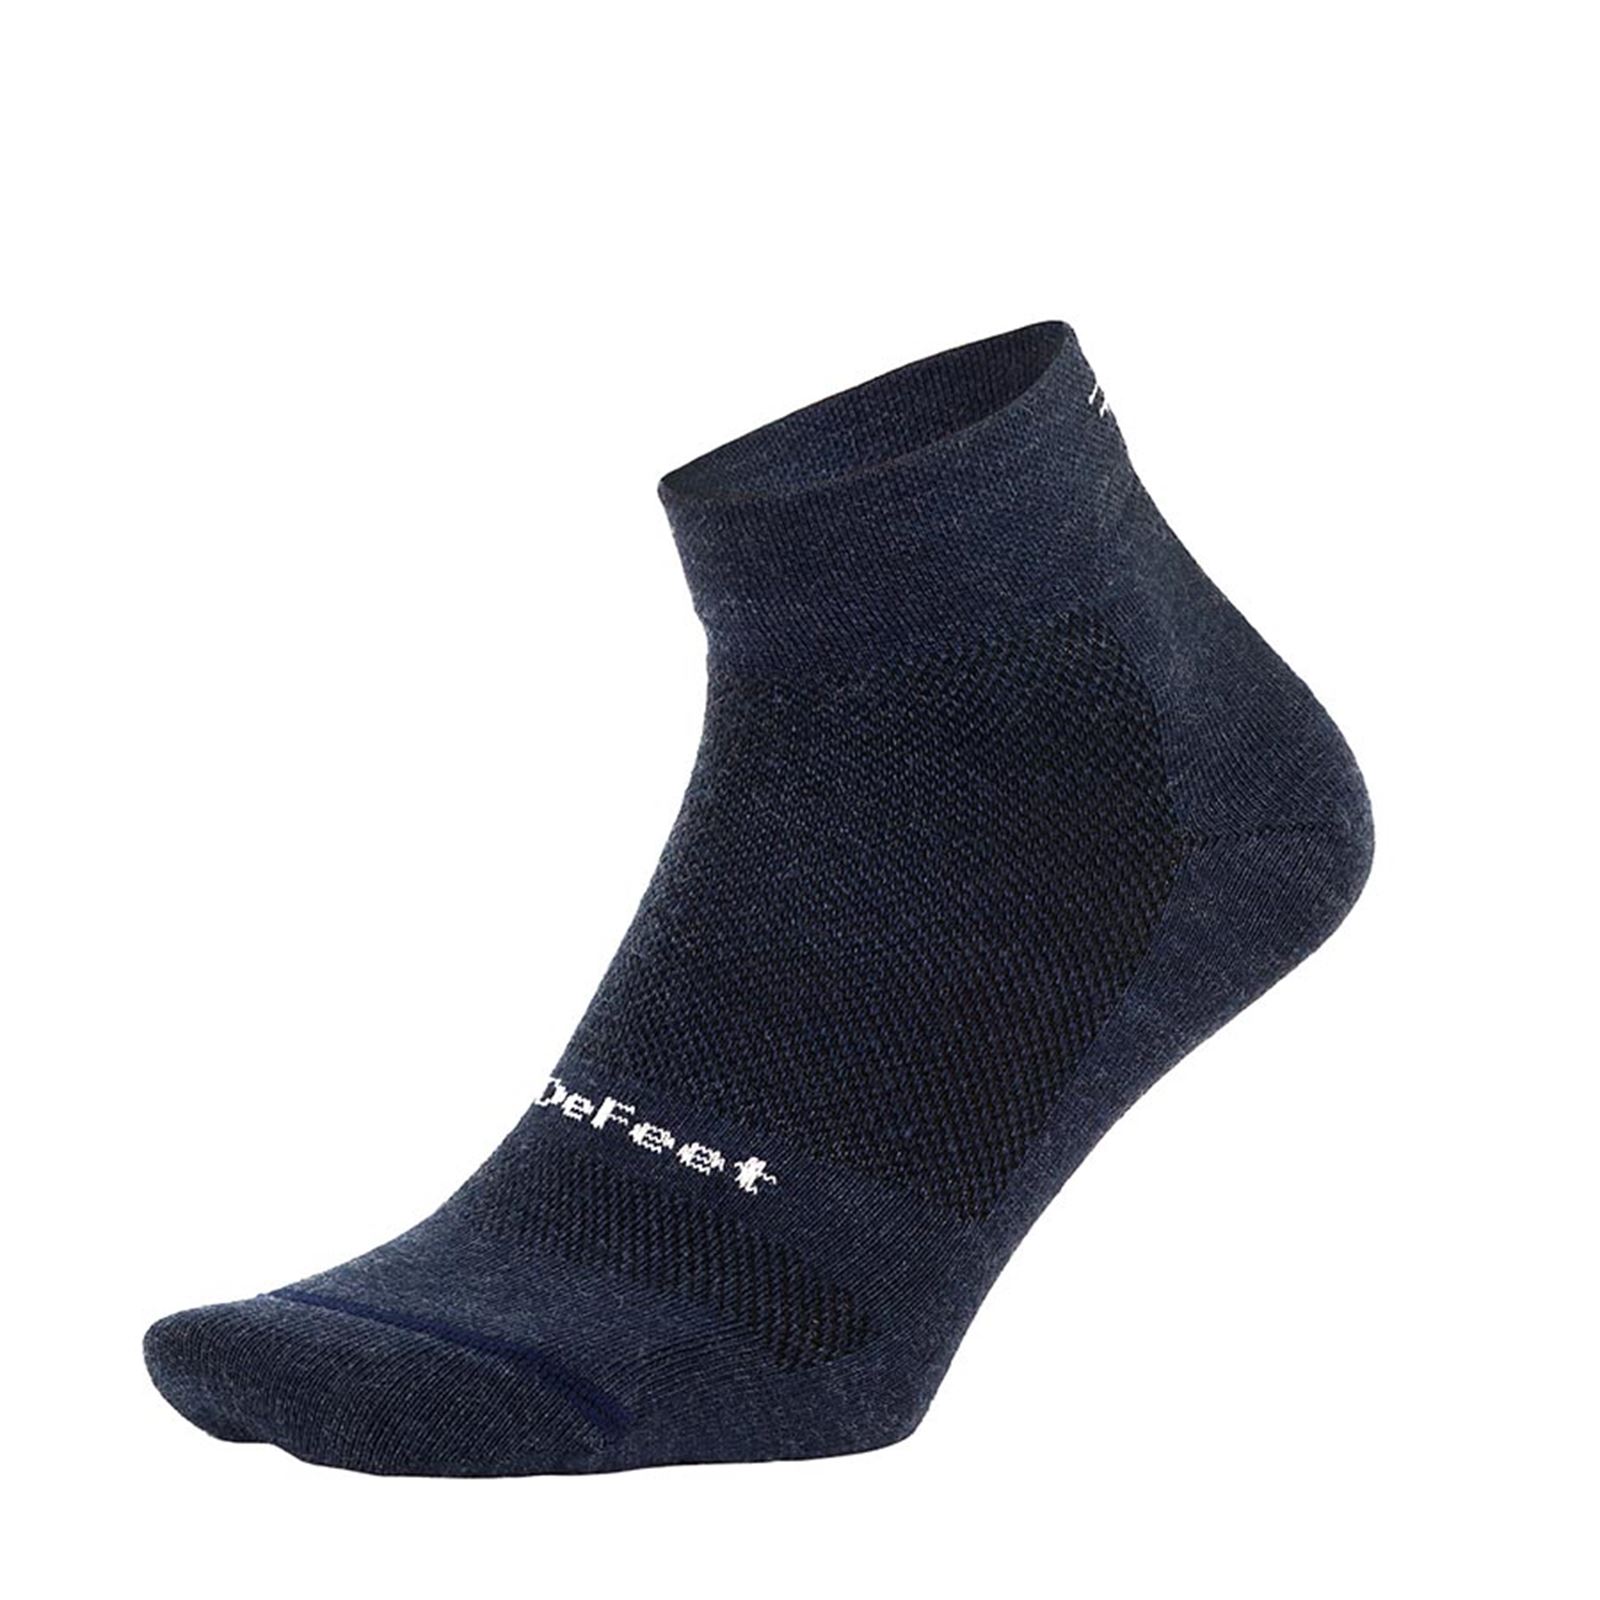 DeFeet Wooleator Pro 1'' Logo Socks - Navy - Large